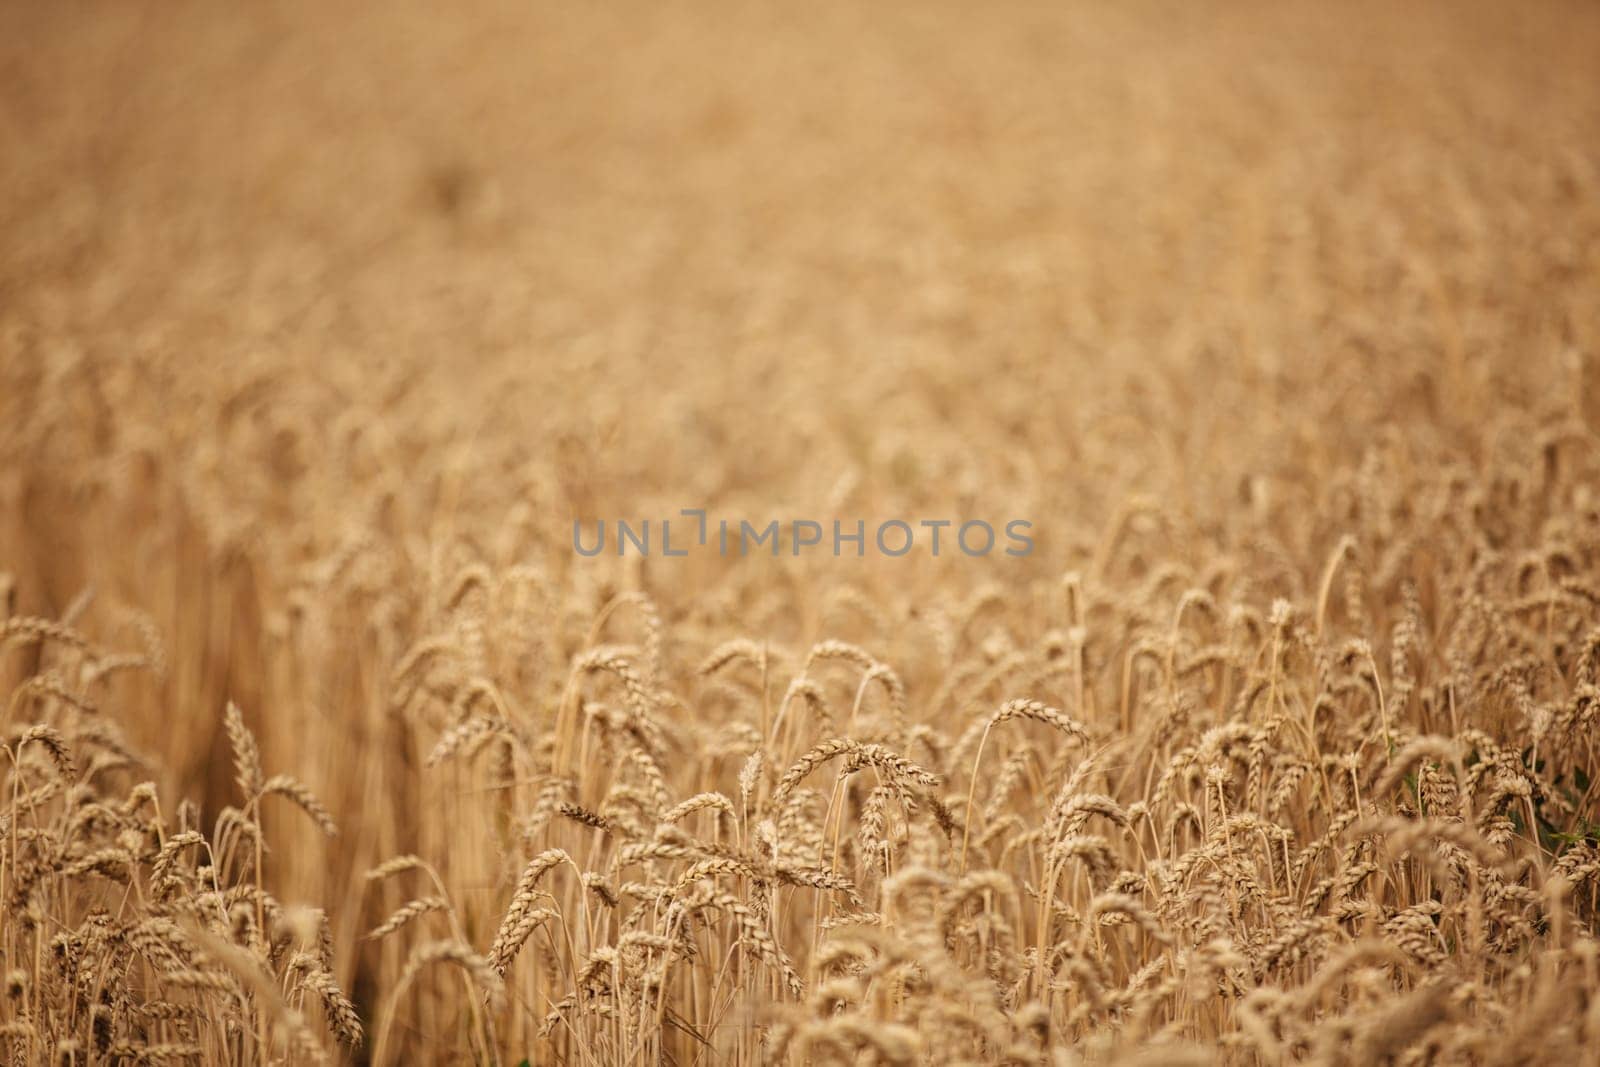 Ears of golden wheat closeup. Wheat field. Beautiful wheat ears background. fresh crop of wheat